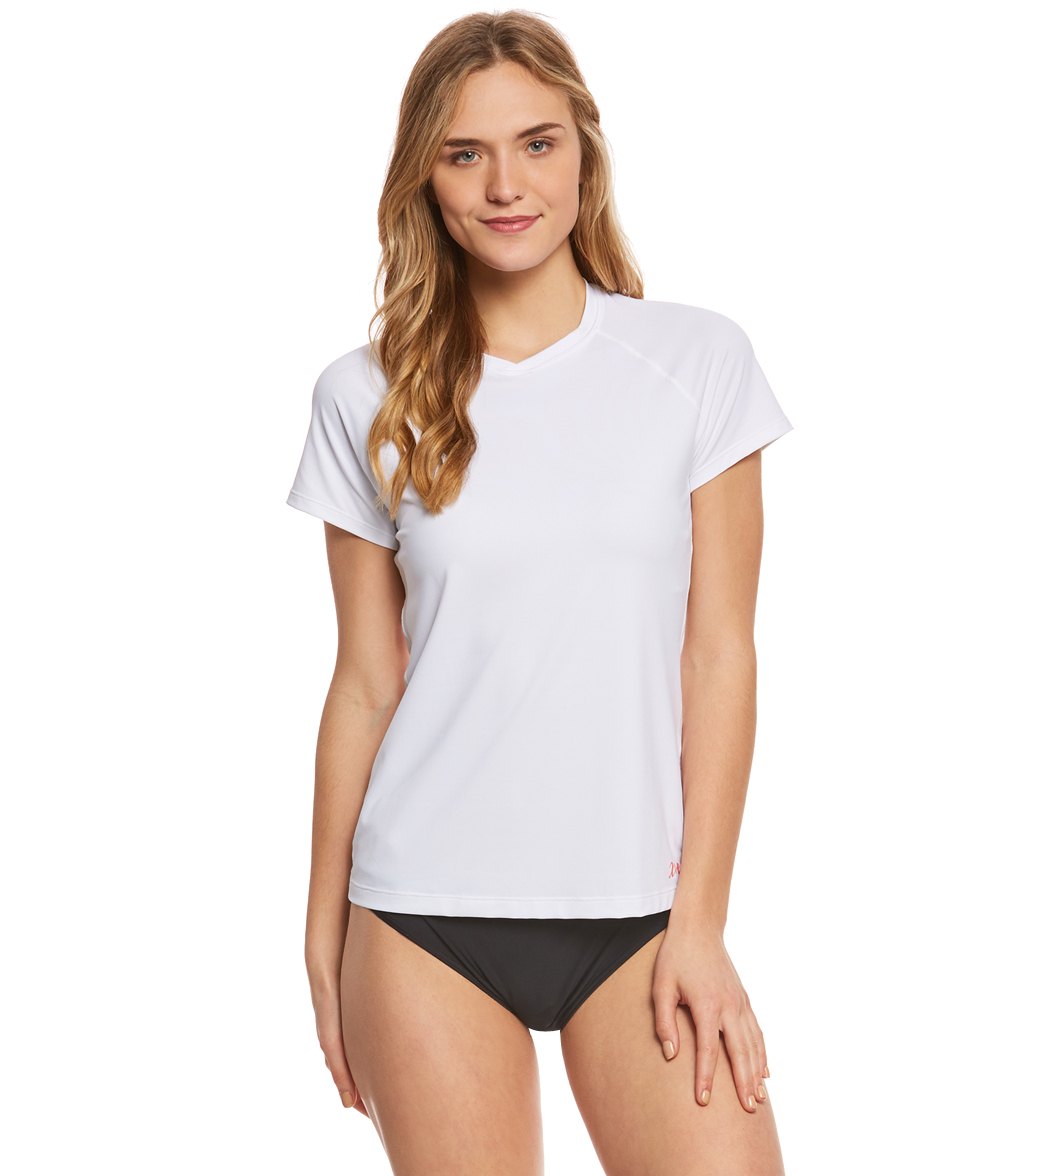 Xcel Women's VentX Short Sleeve Swim Shirt at SwimOutlet.com